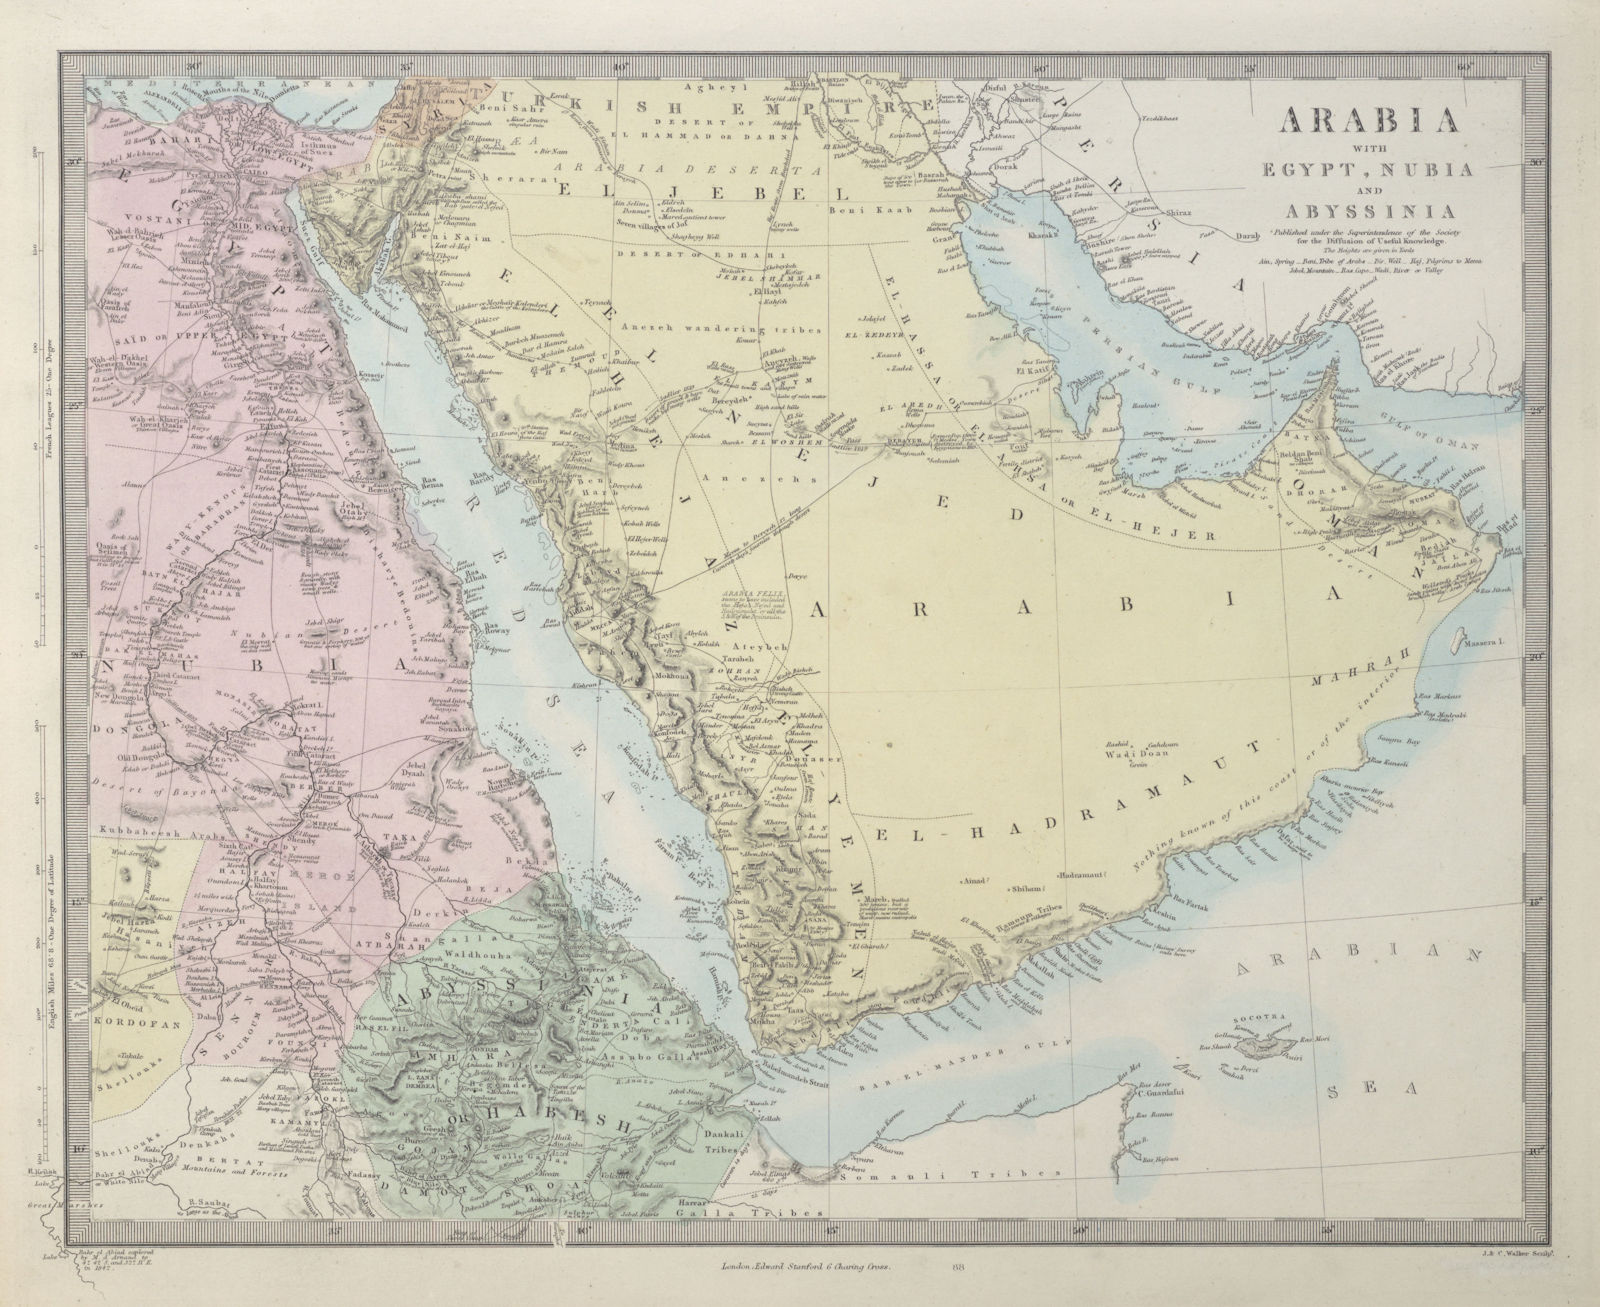 ARABIA Hajj routes Deba/Dubai Abothubi/Abu Dhabi UAE Pirate coast SDUK 1857 map